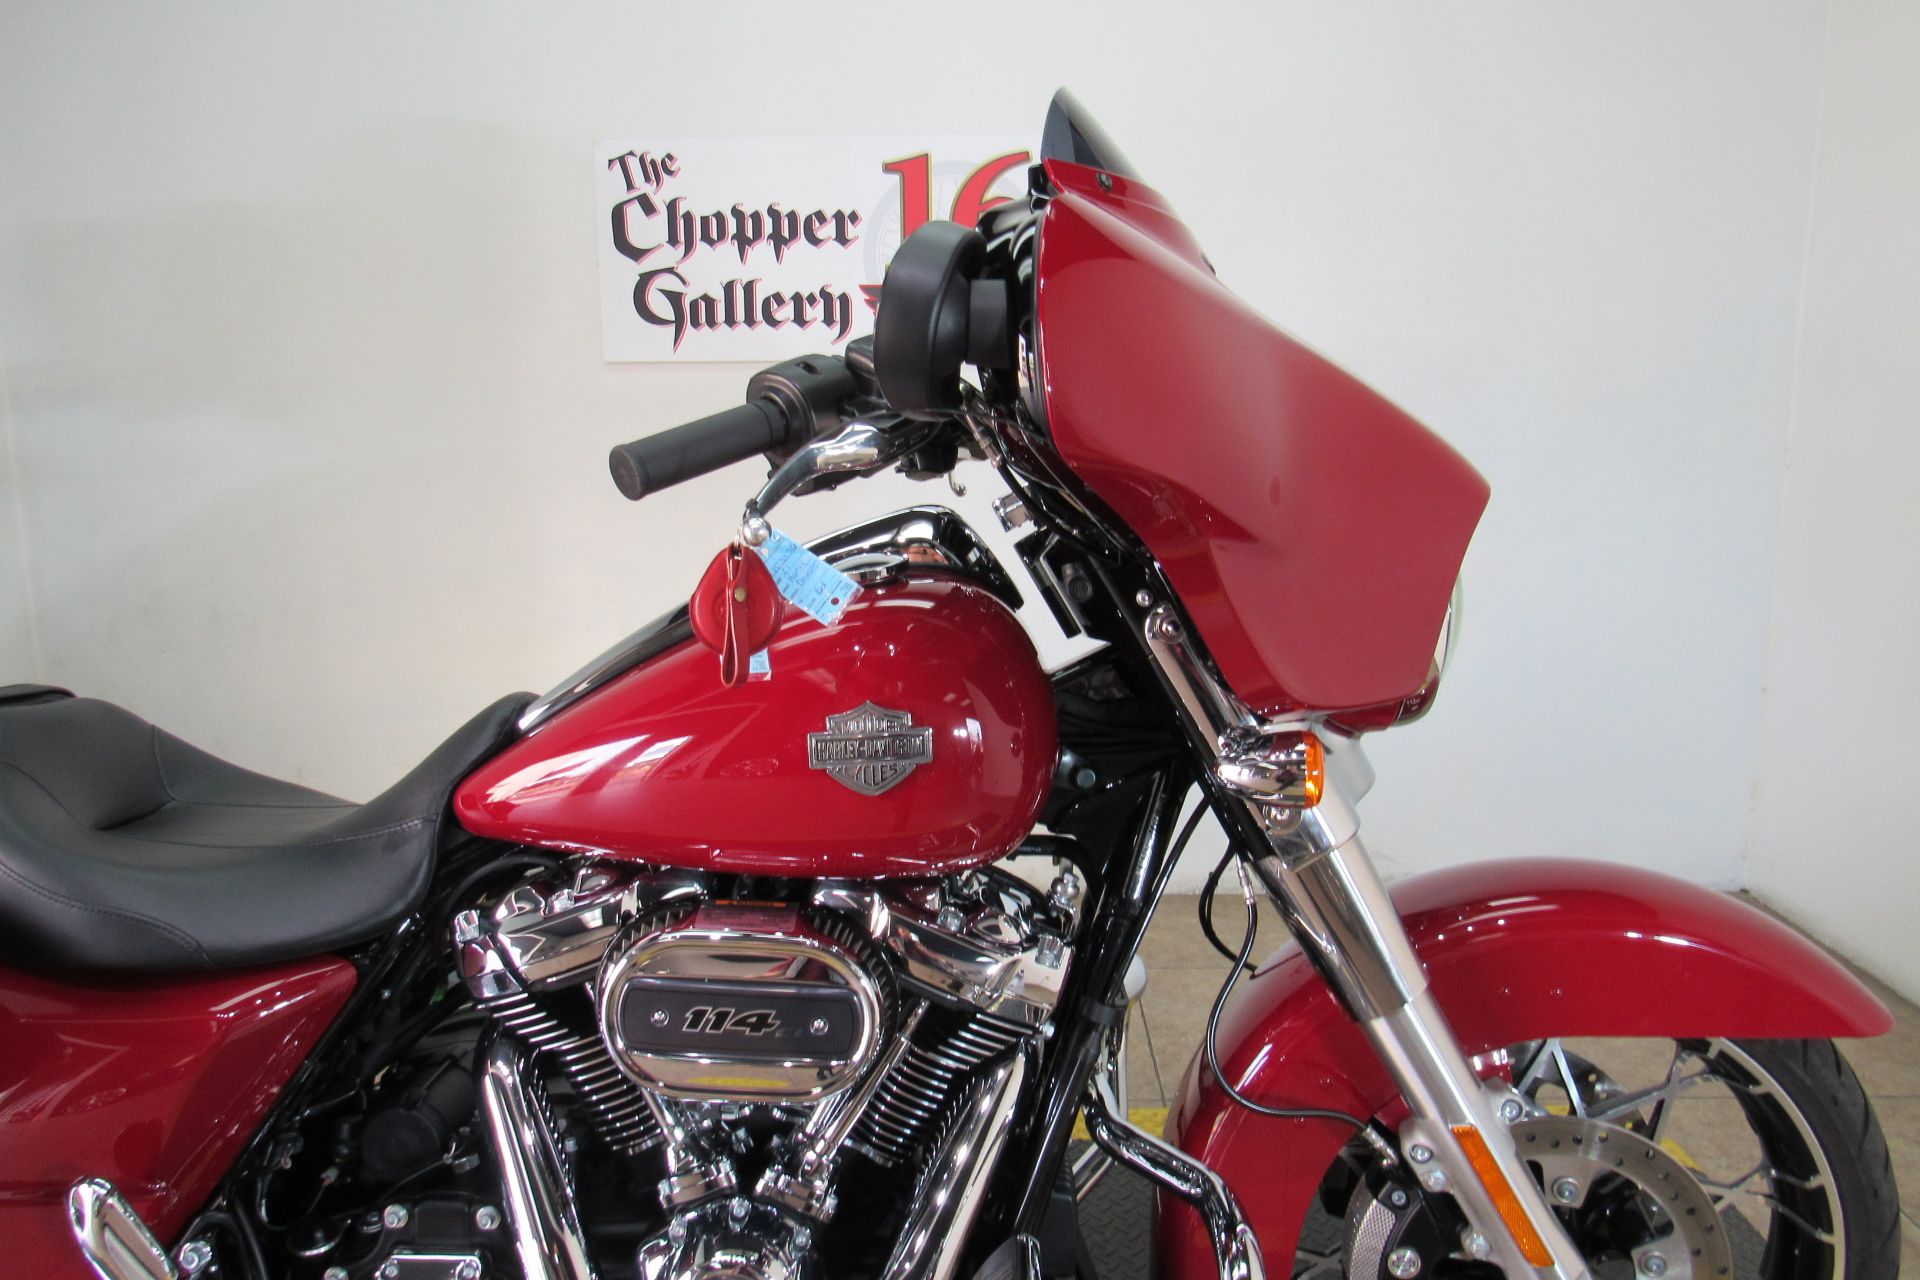 2021 Harley-Davidson Street Glide® Special in Temecula, California - Photo 3